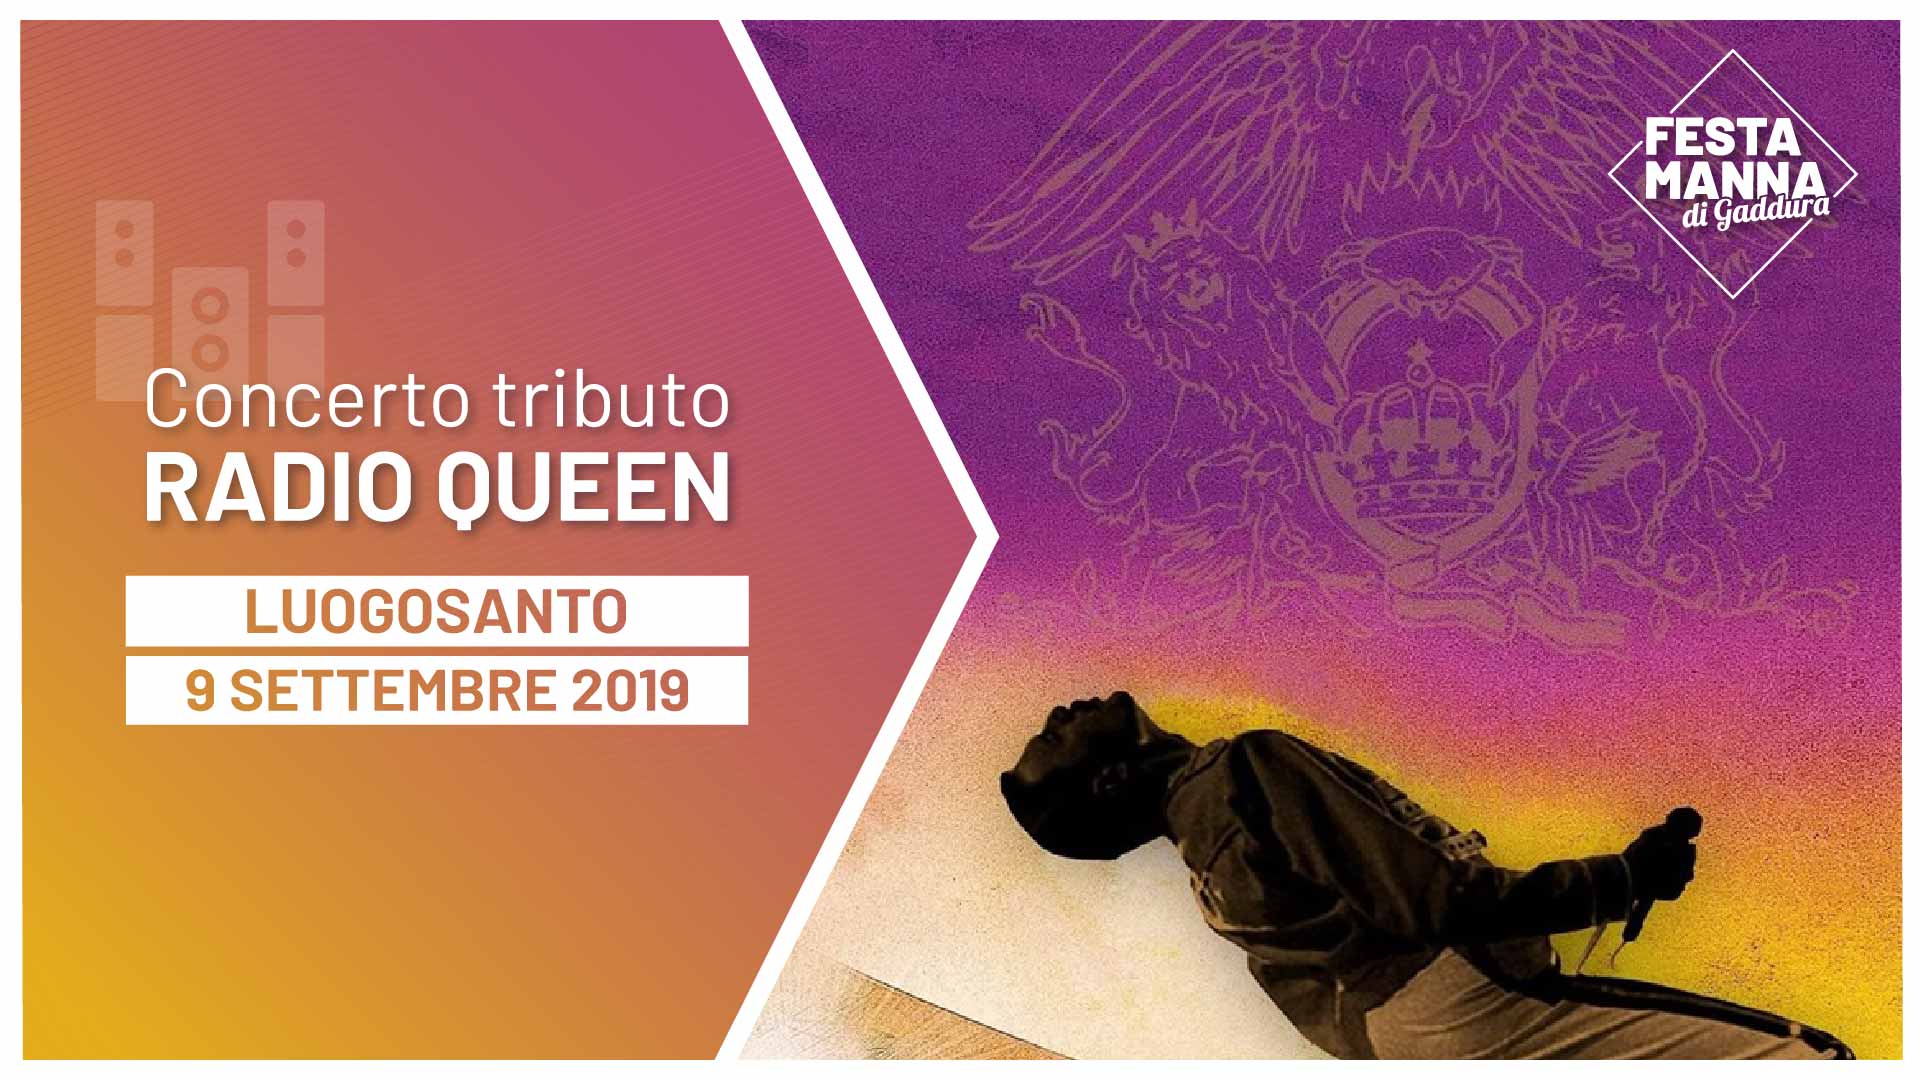 Concert Tribute Radio Queen | Festa Manna di Gaddura 2019